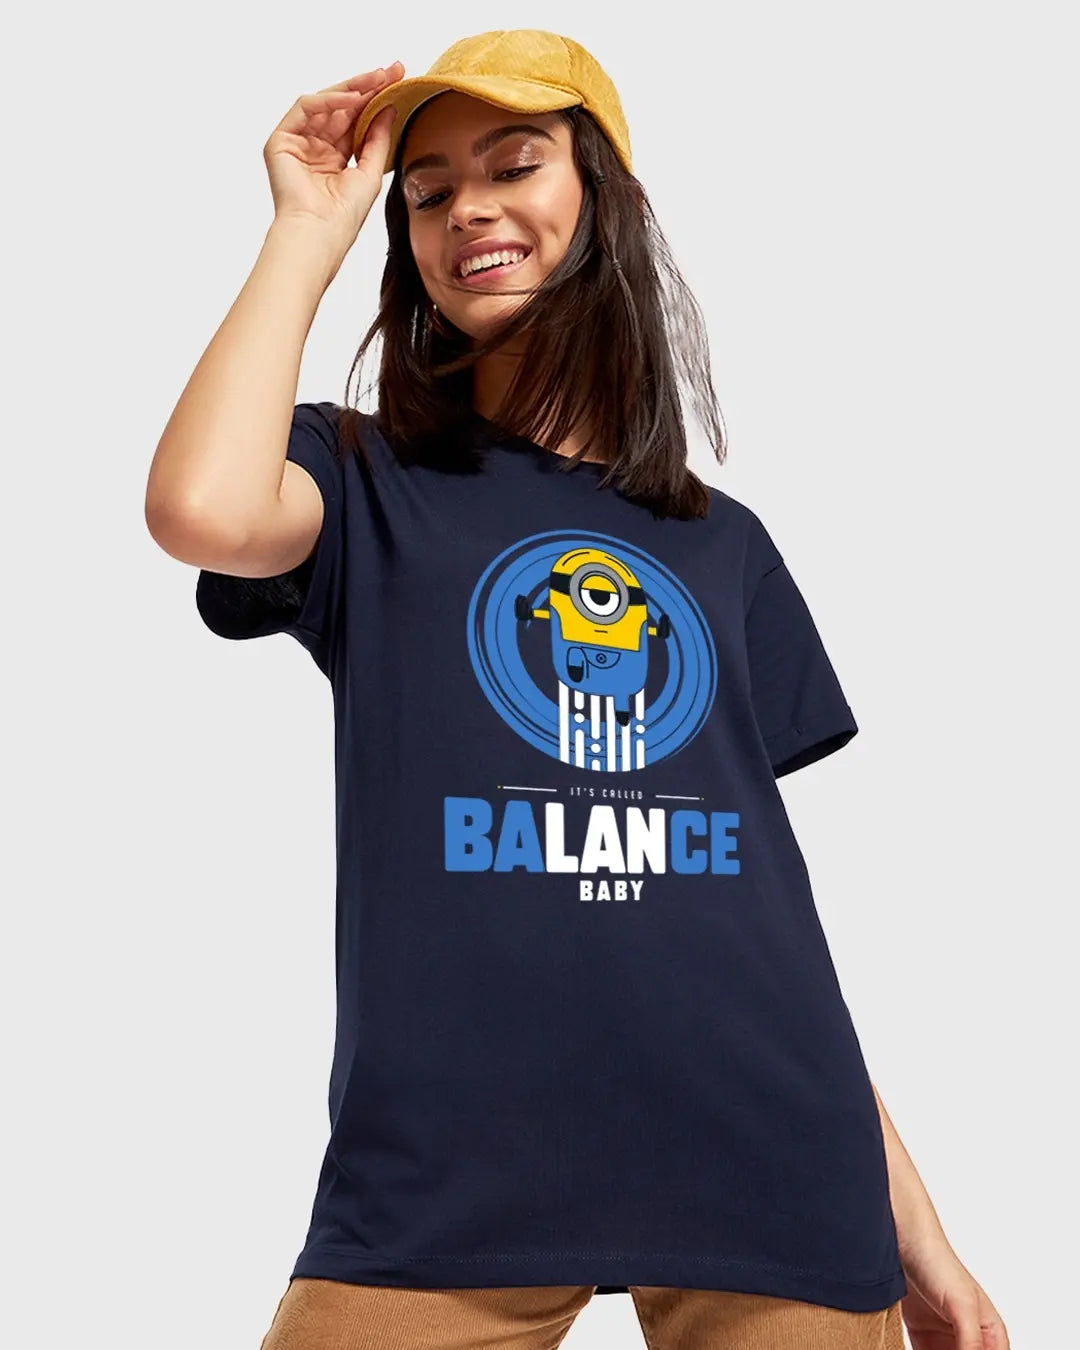 Women's Navy Blue Balance Baby Graphic Printed Boyfriend T-shirt